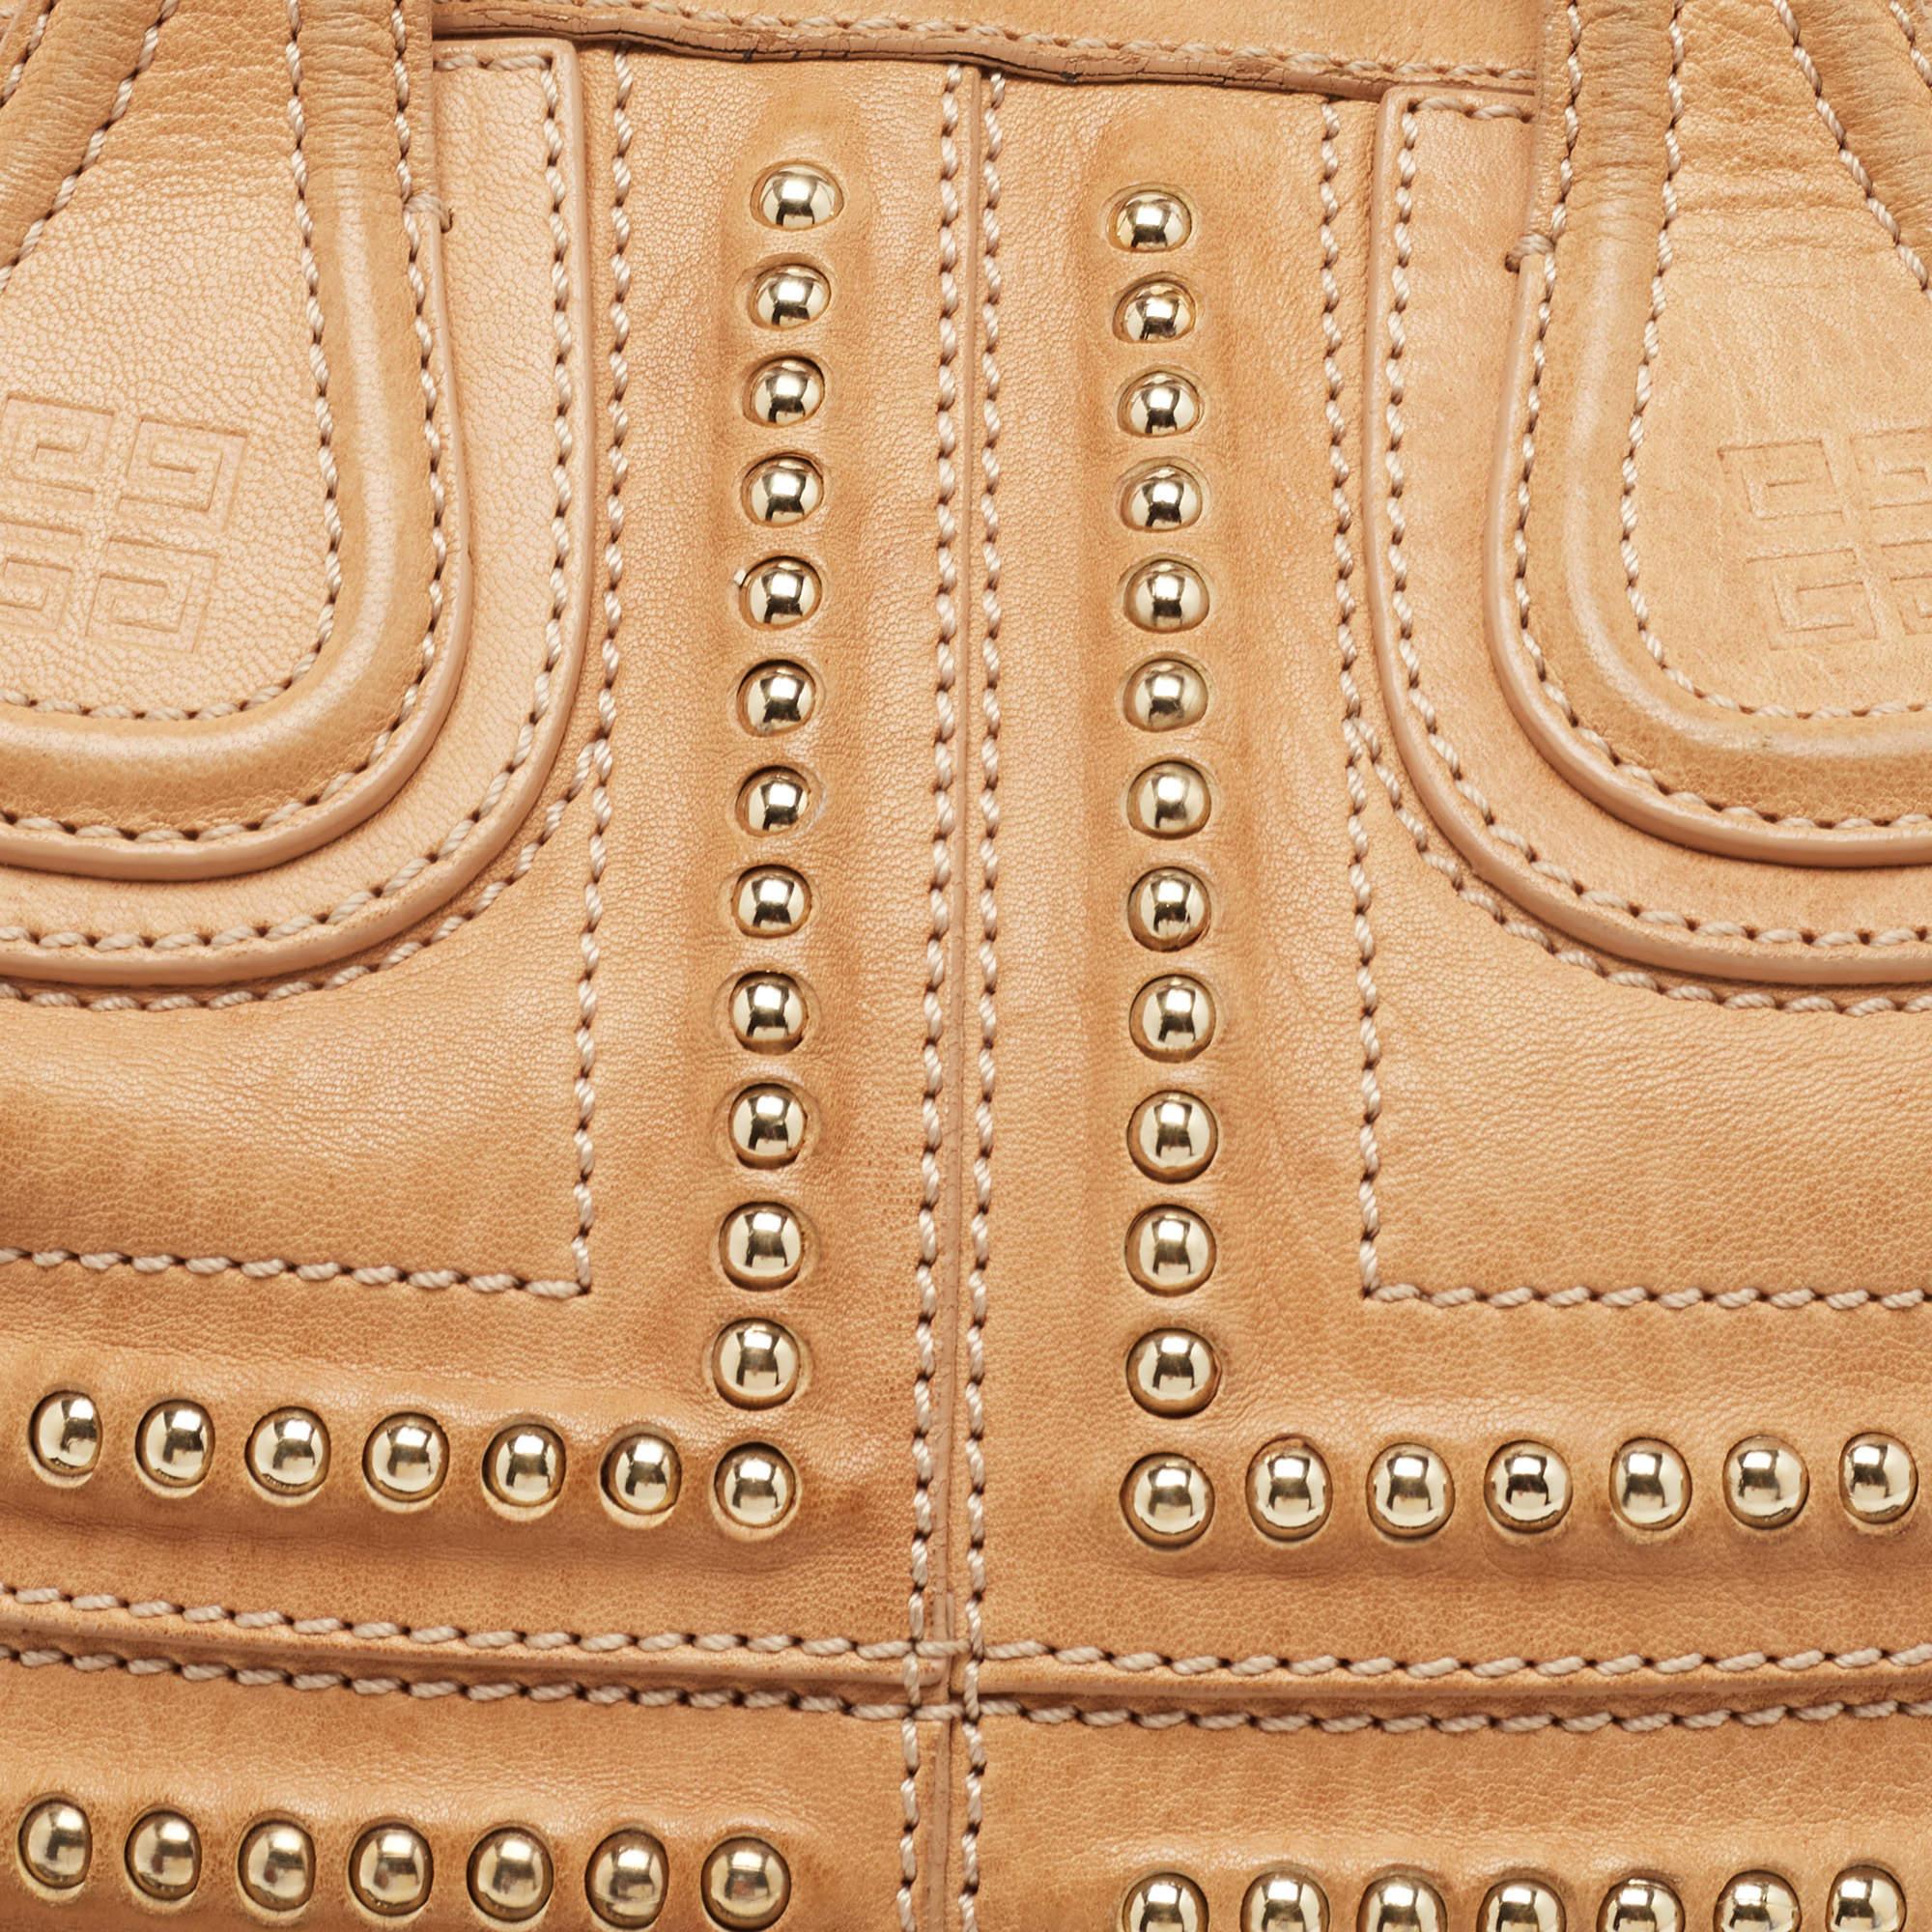 Givenchy Beige Leather Studded Nightingale Bag 1